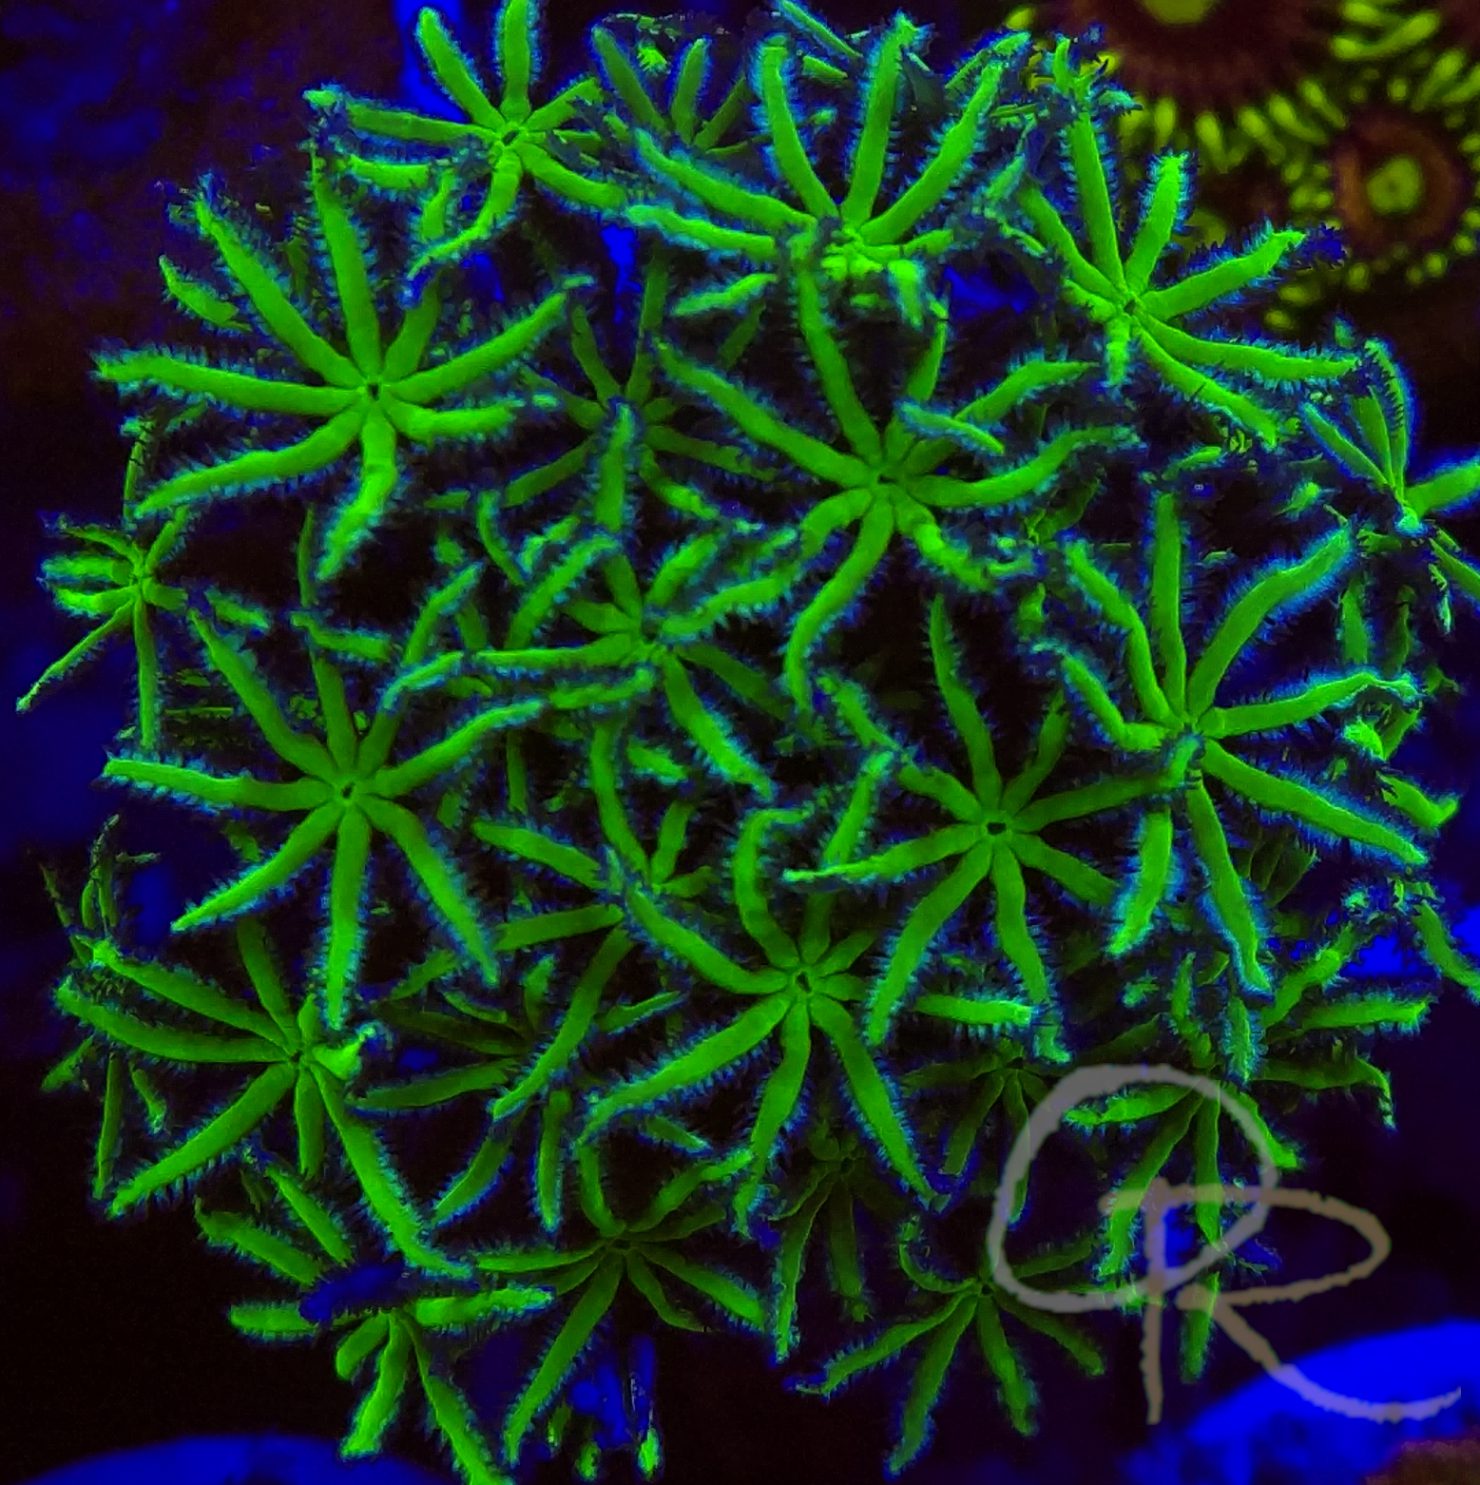 Pipe Organ Coral – Ultra Green (Tubipora)